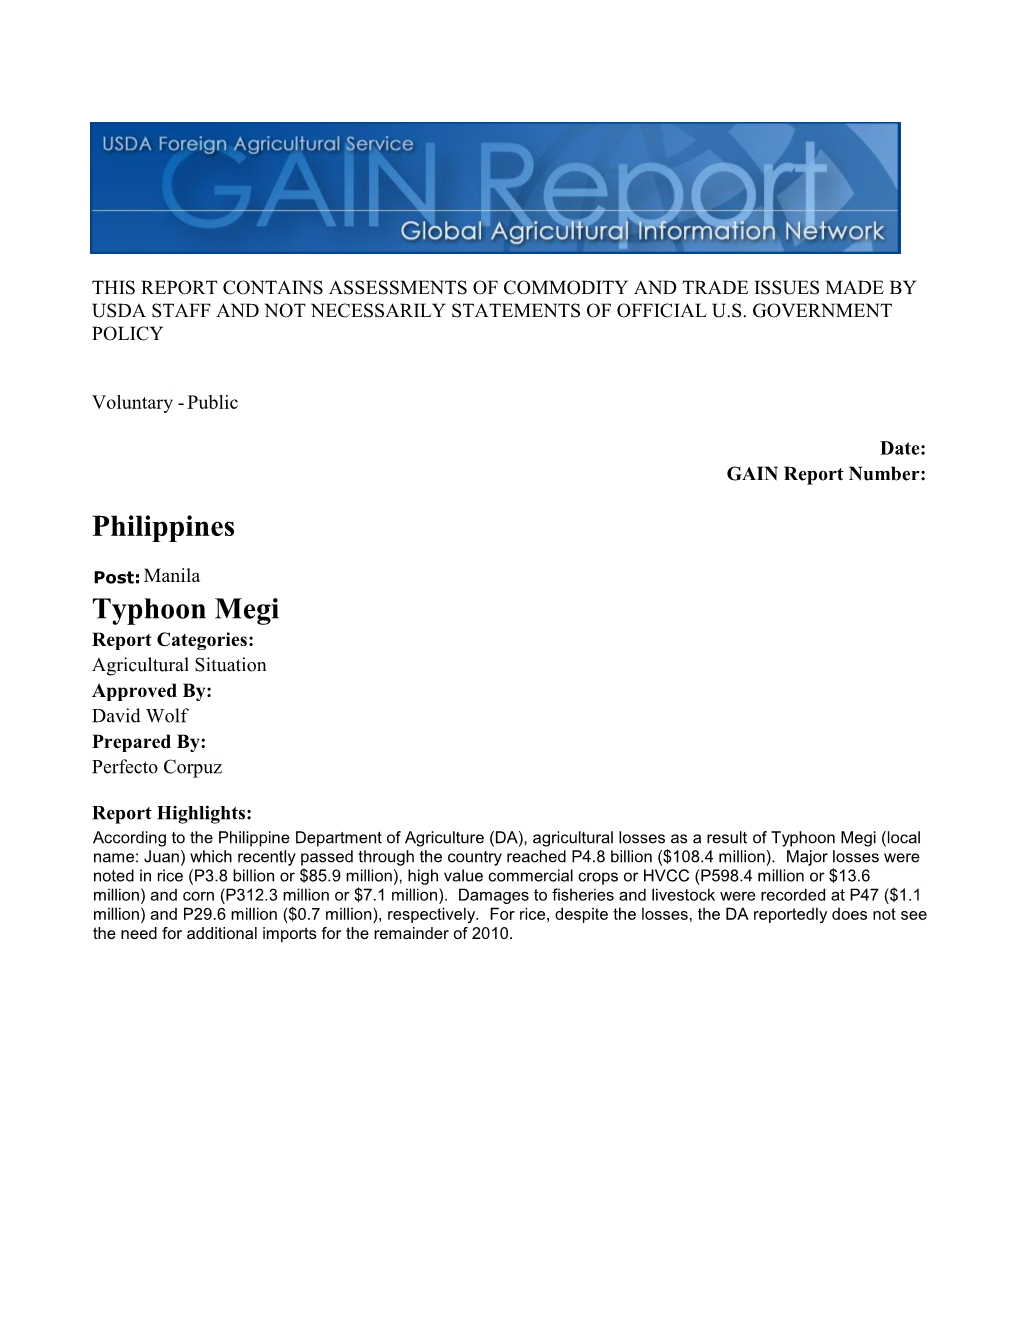 Philippines Typhoon Megi